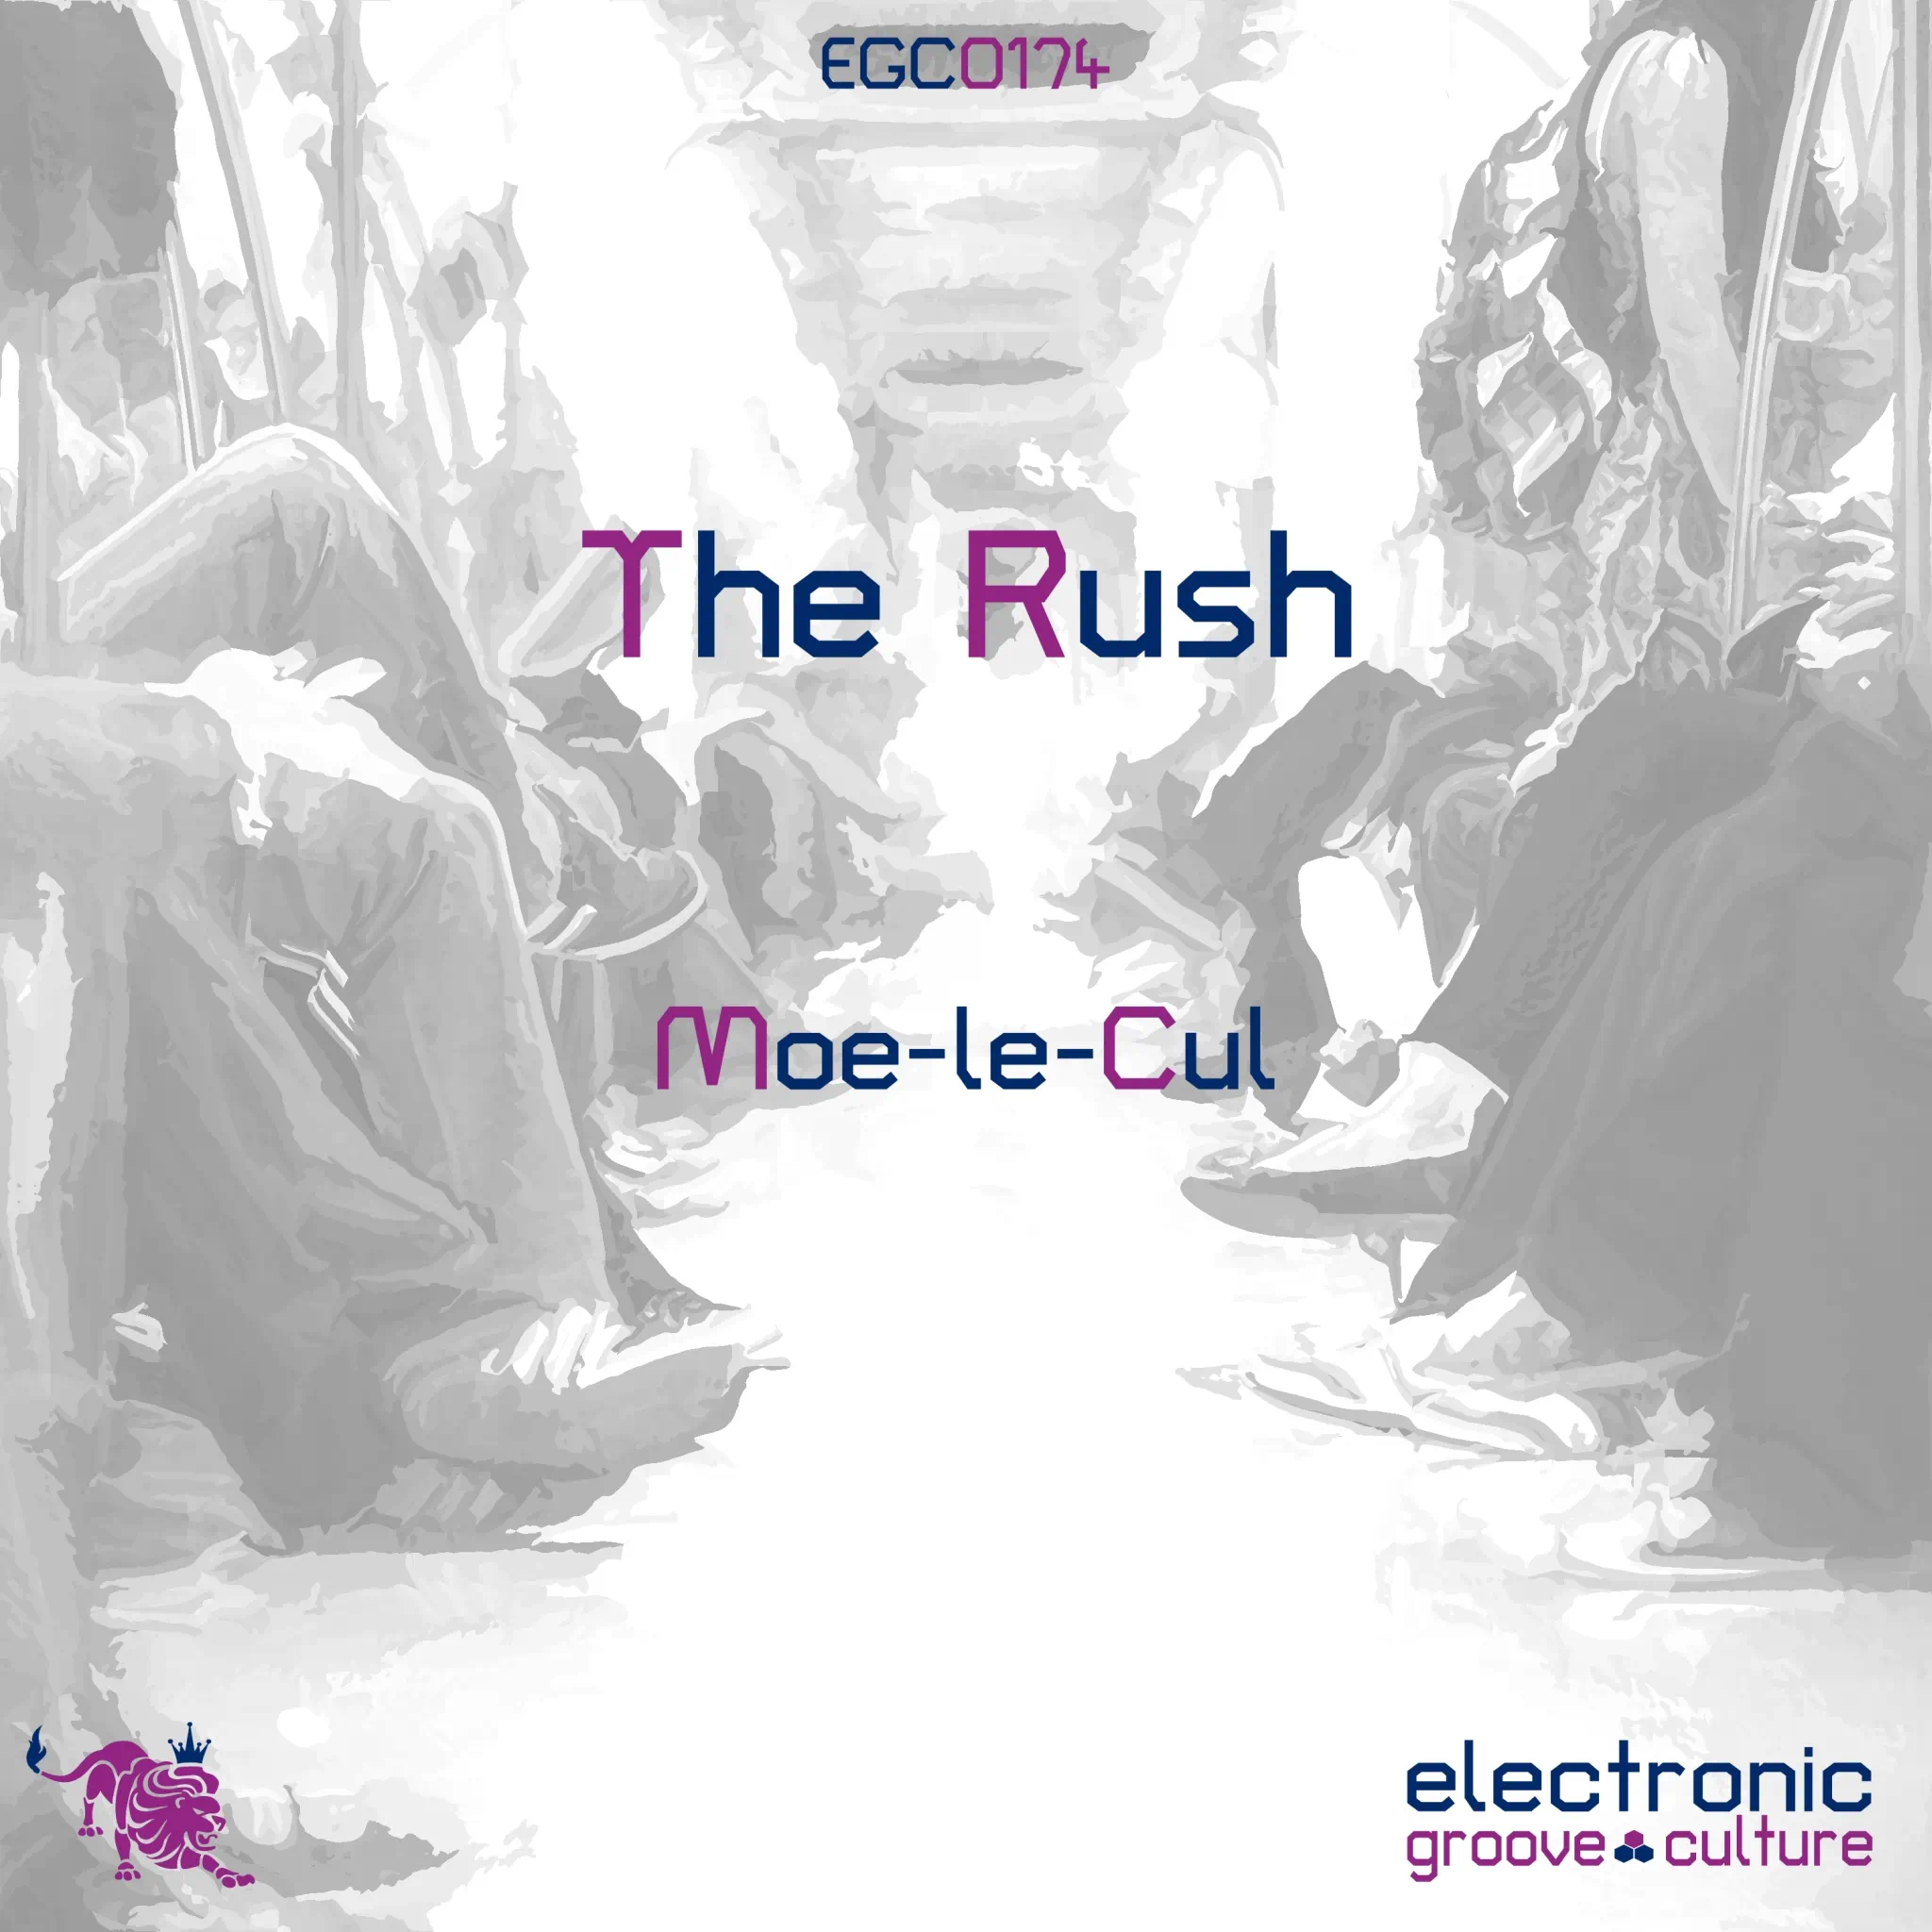 Advertising: Moe-le-Cul - The Rush